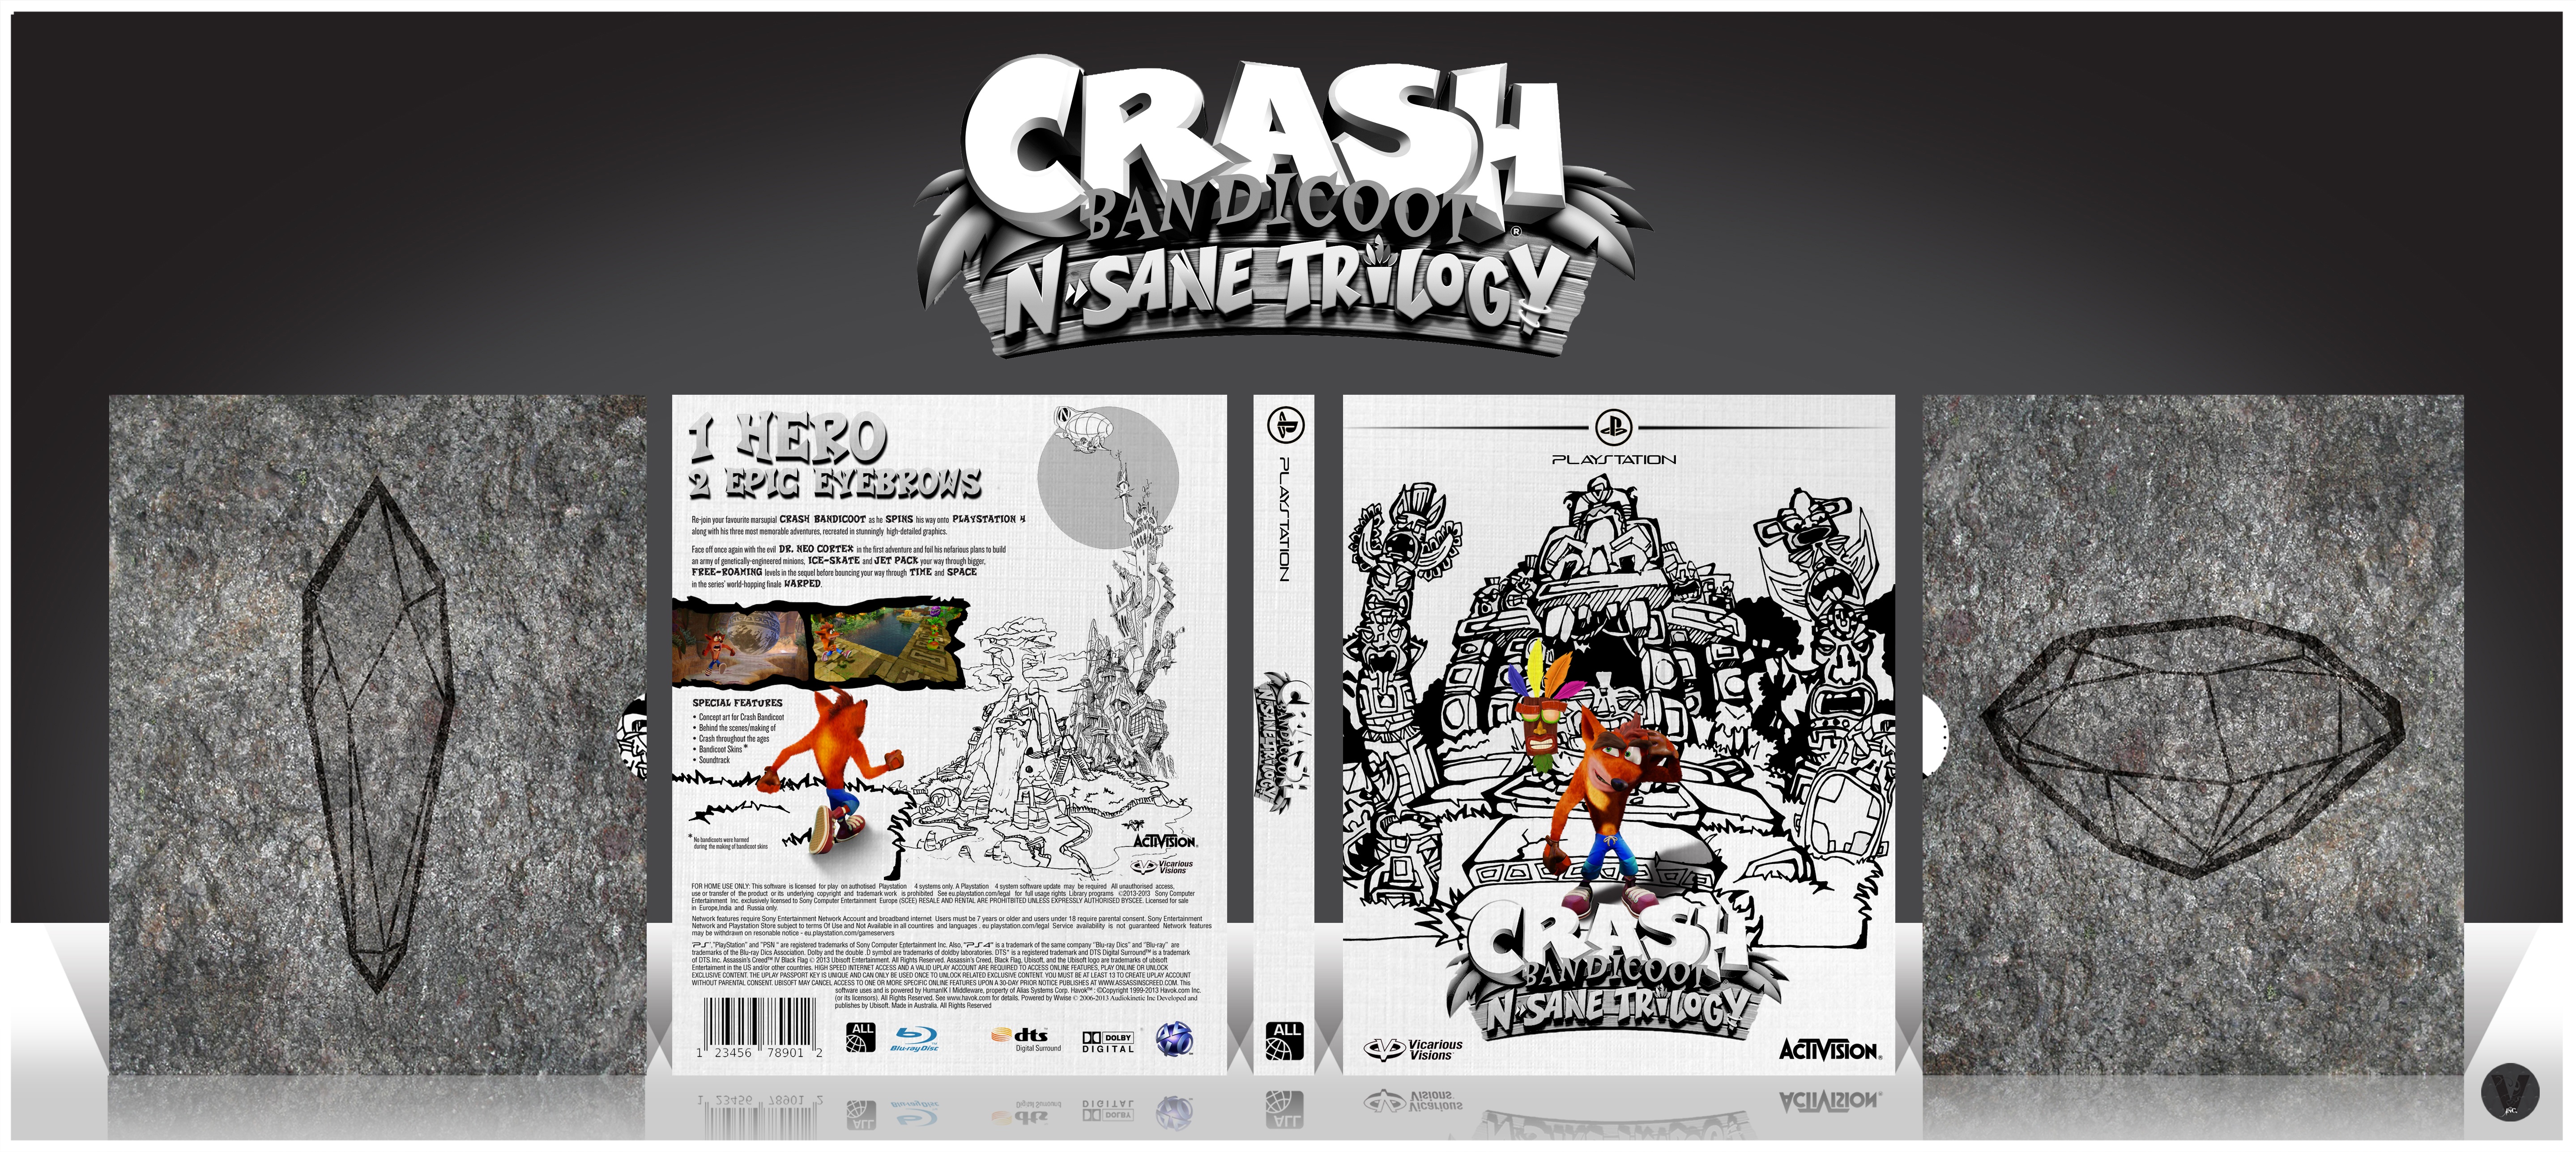 Crash Bandicoot: N. Sane Trilogy box cover